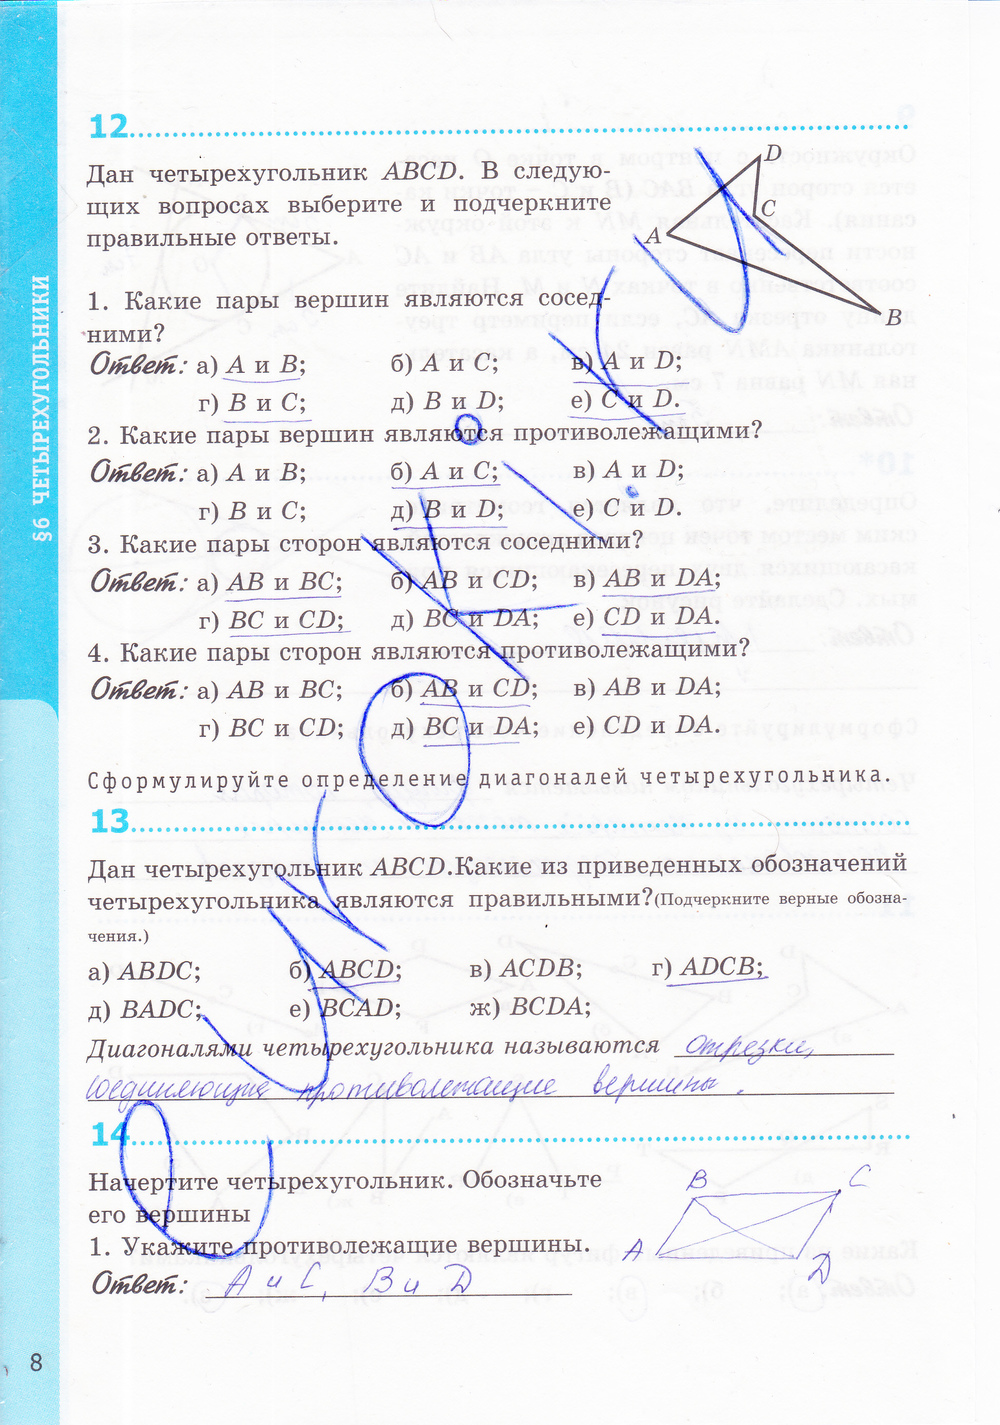 Гдз по геометрии в рабочей тетради класса мищенко т.м